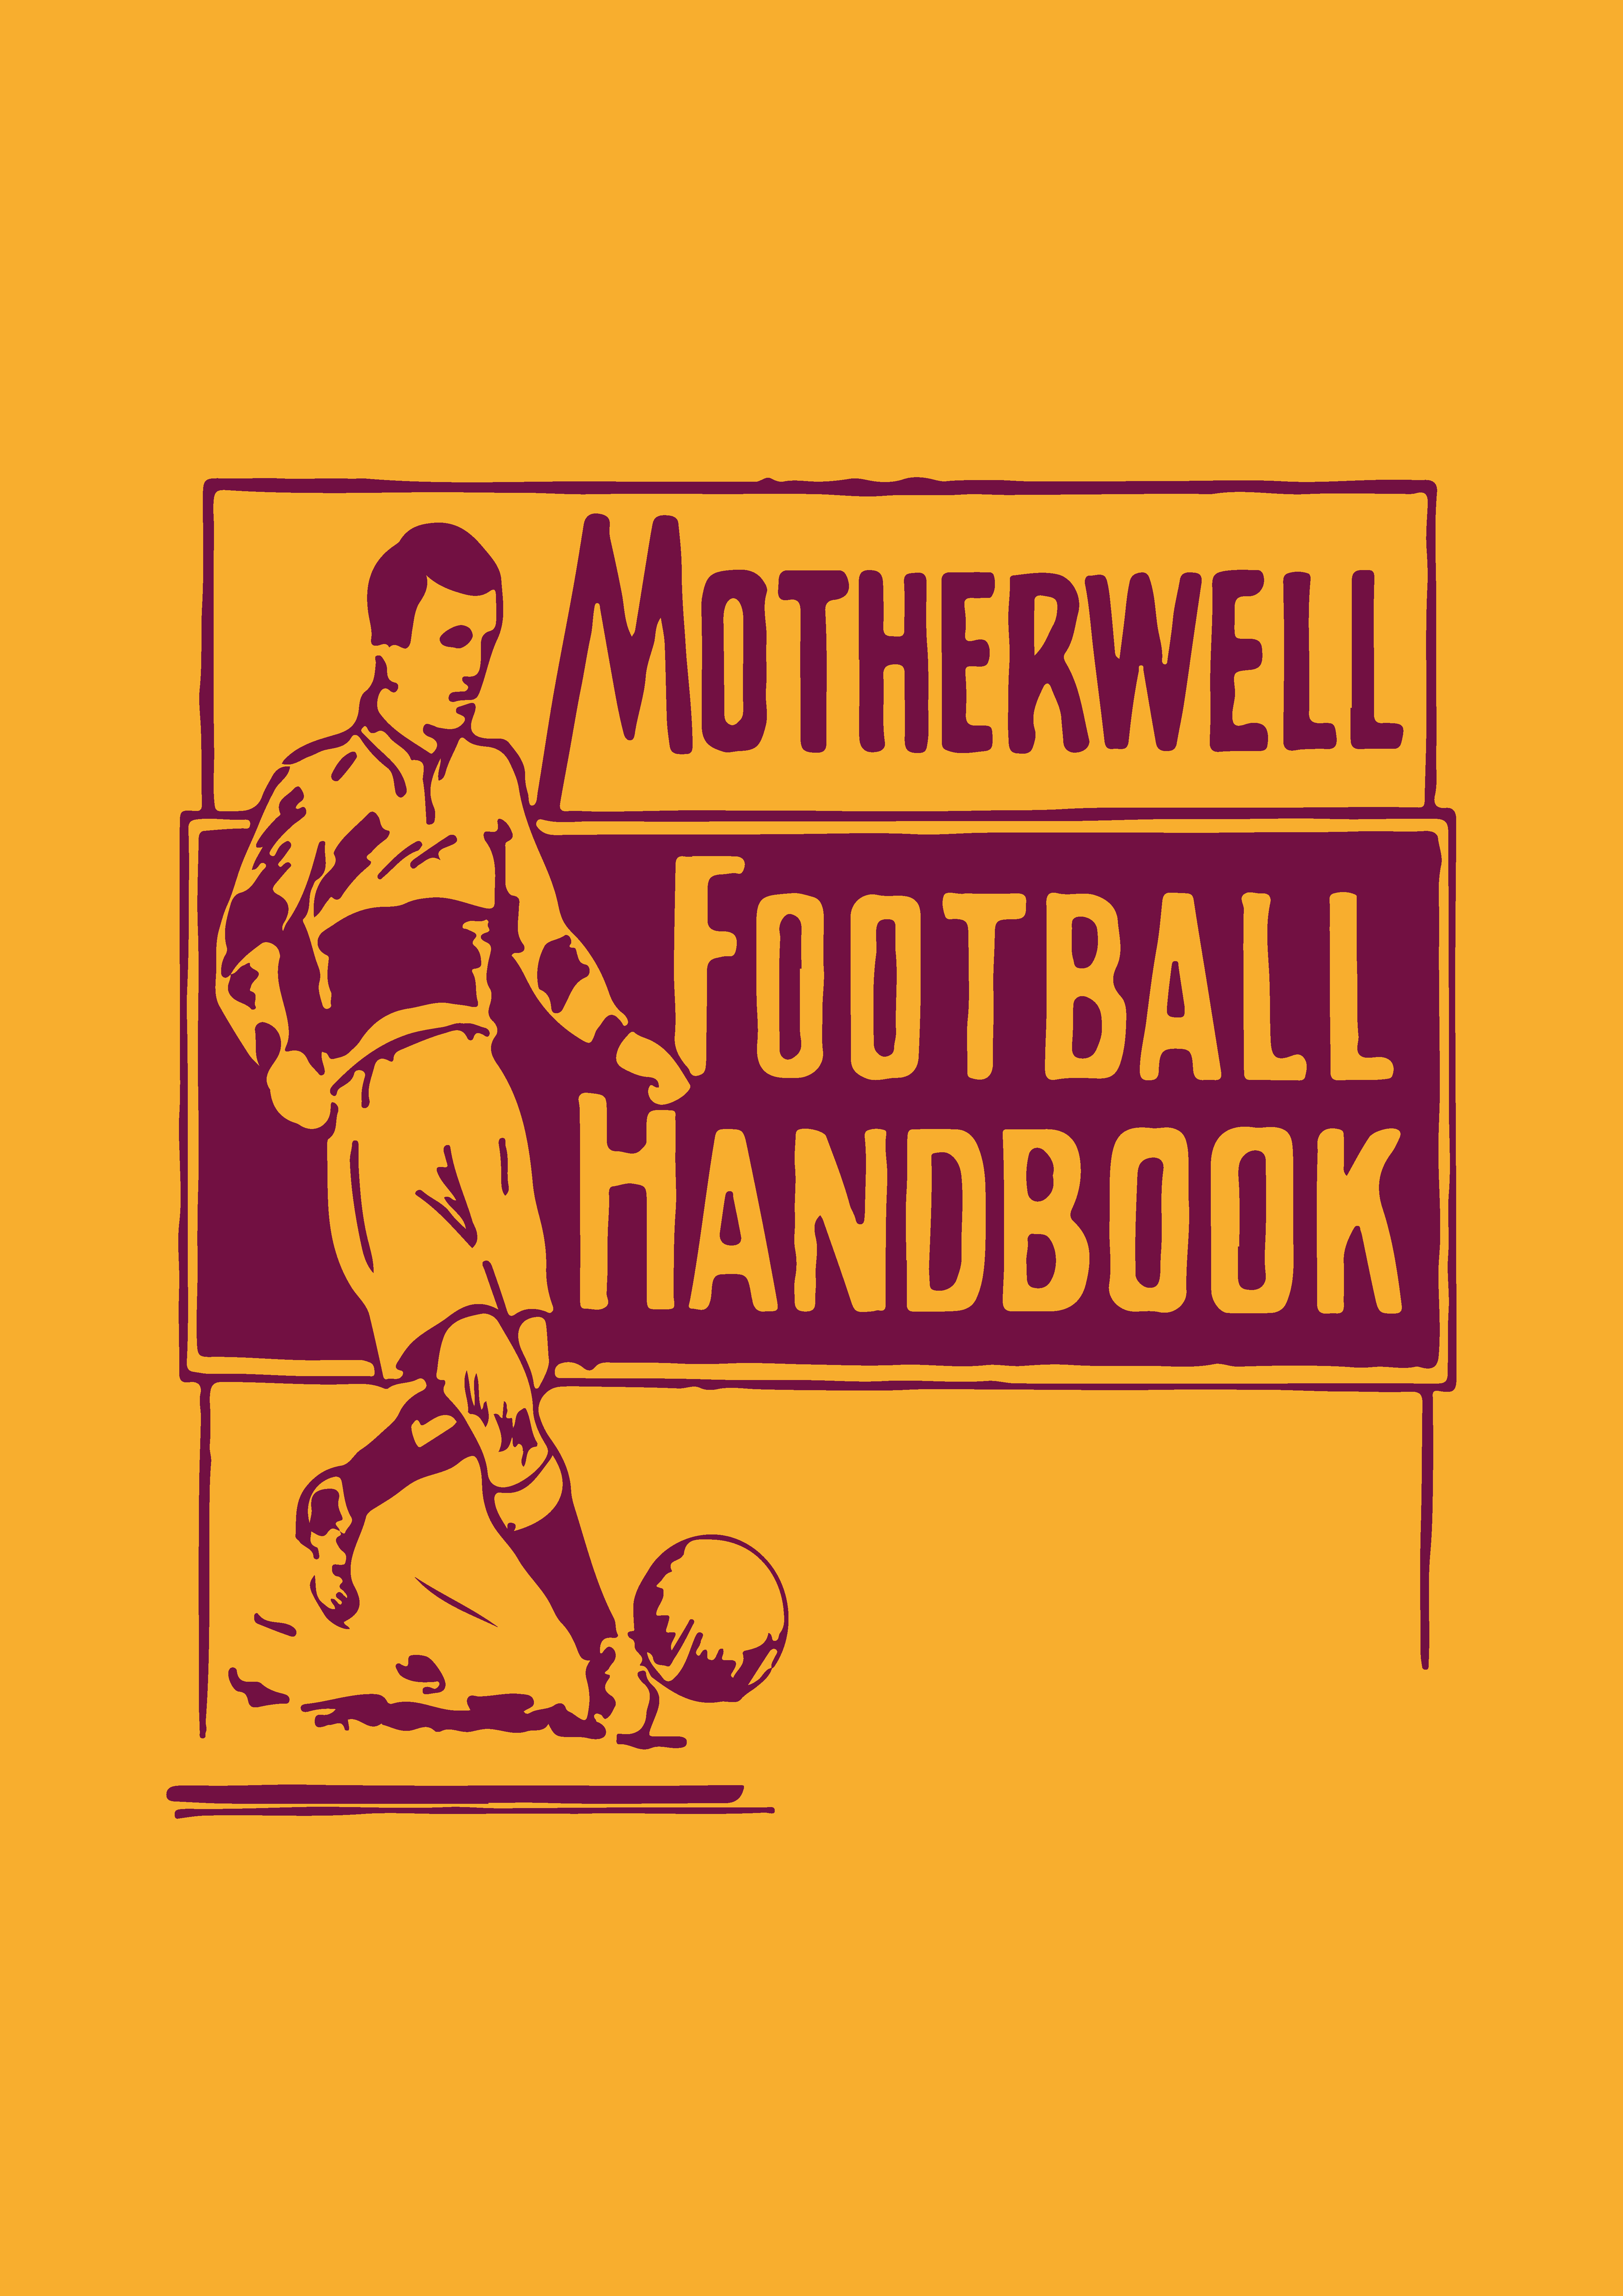 Motherwell Retro Handbook Poster